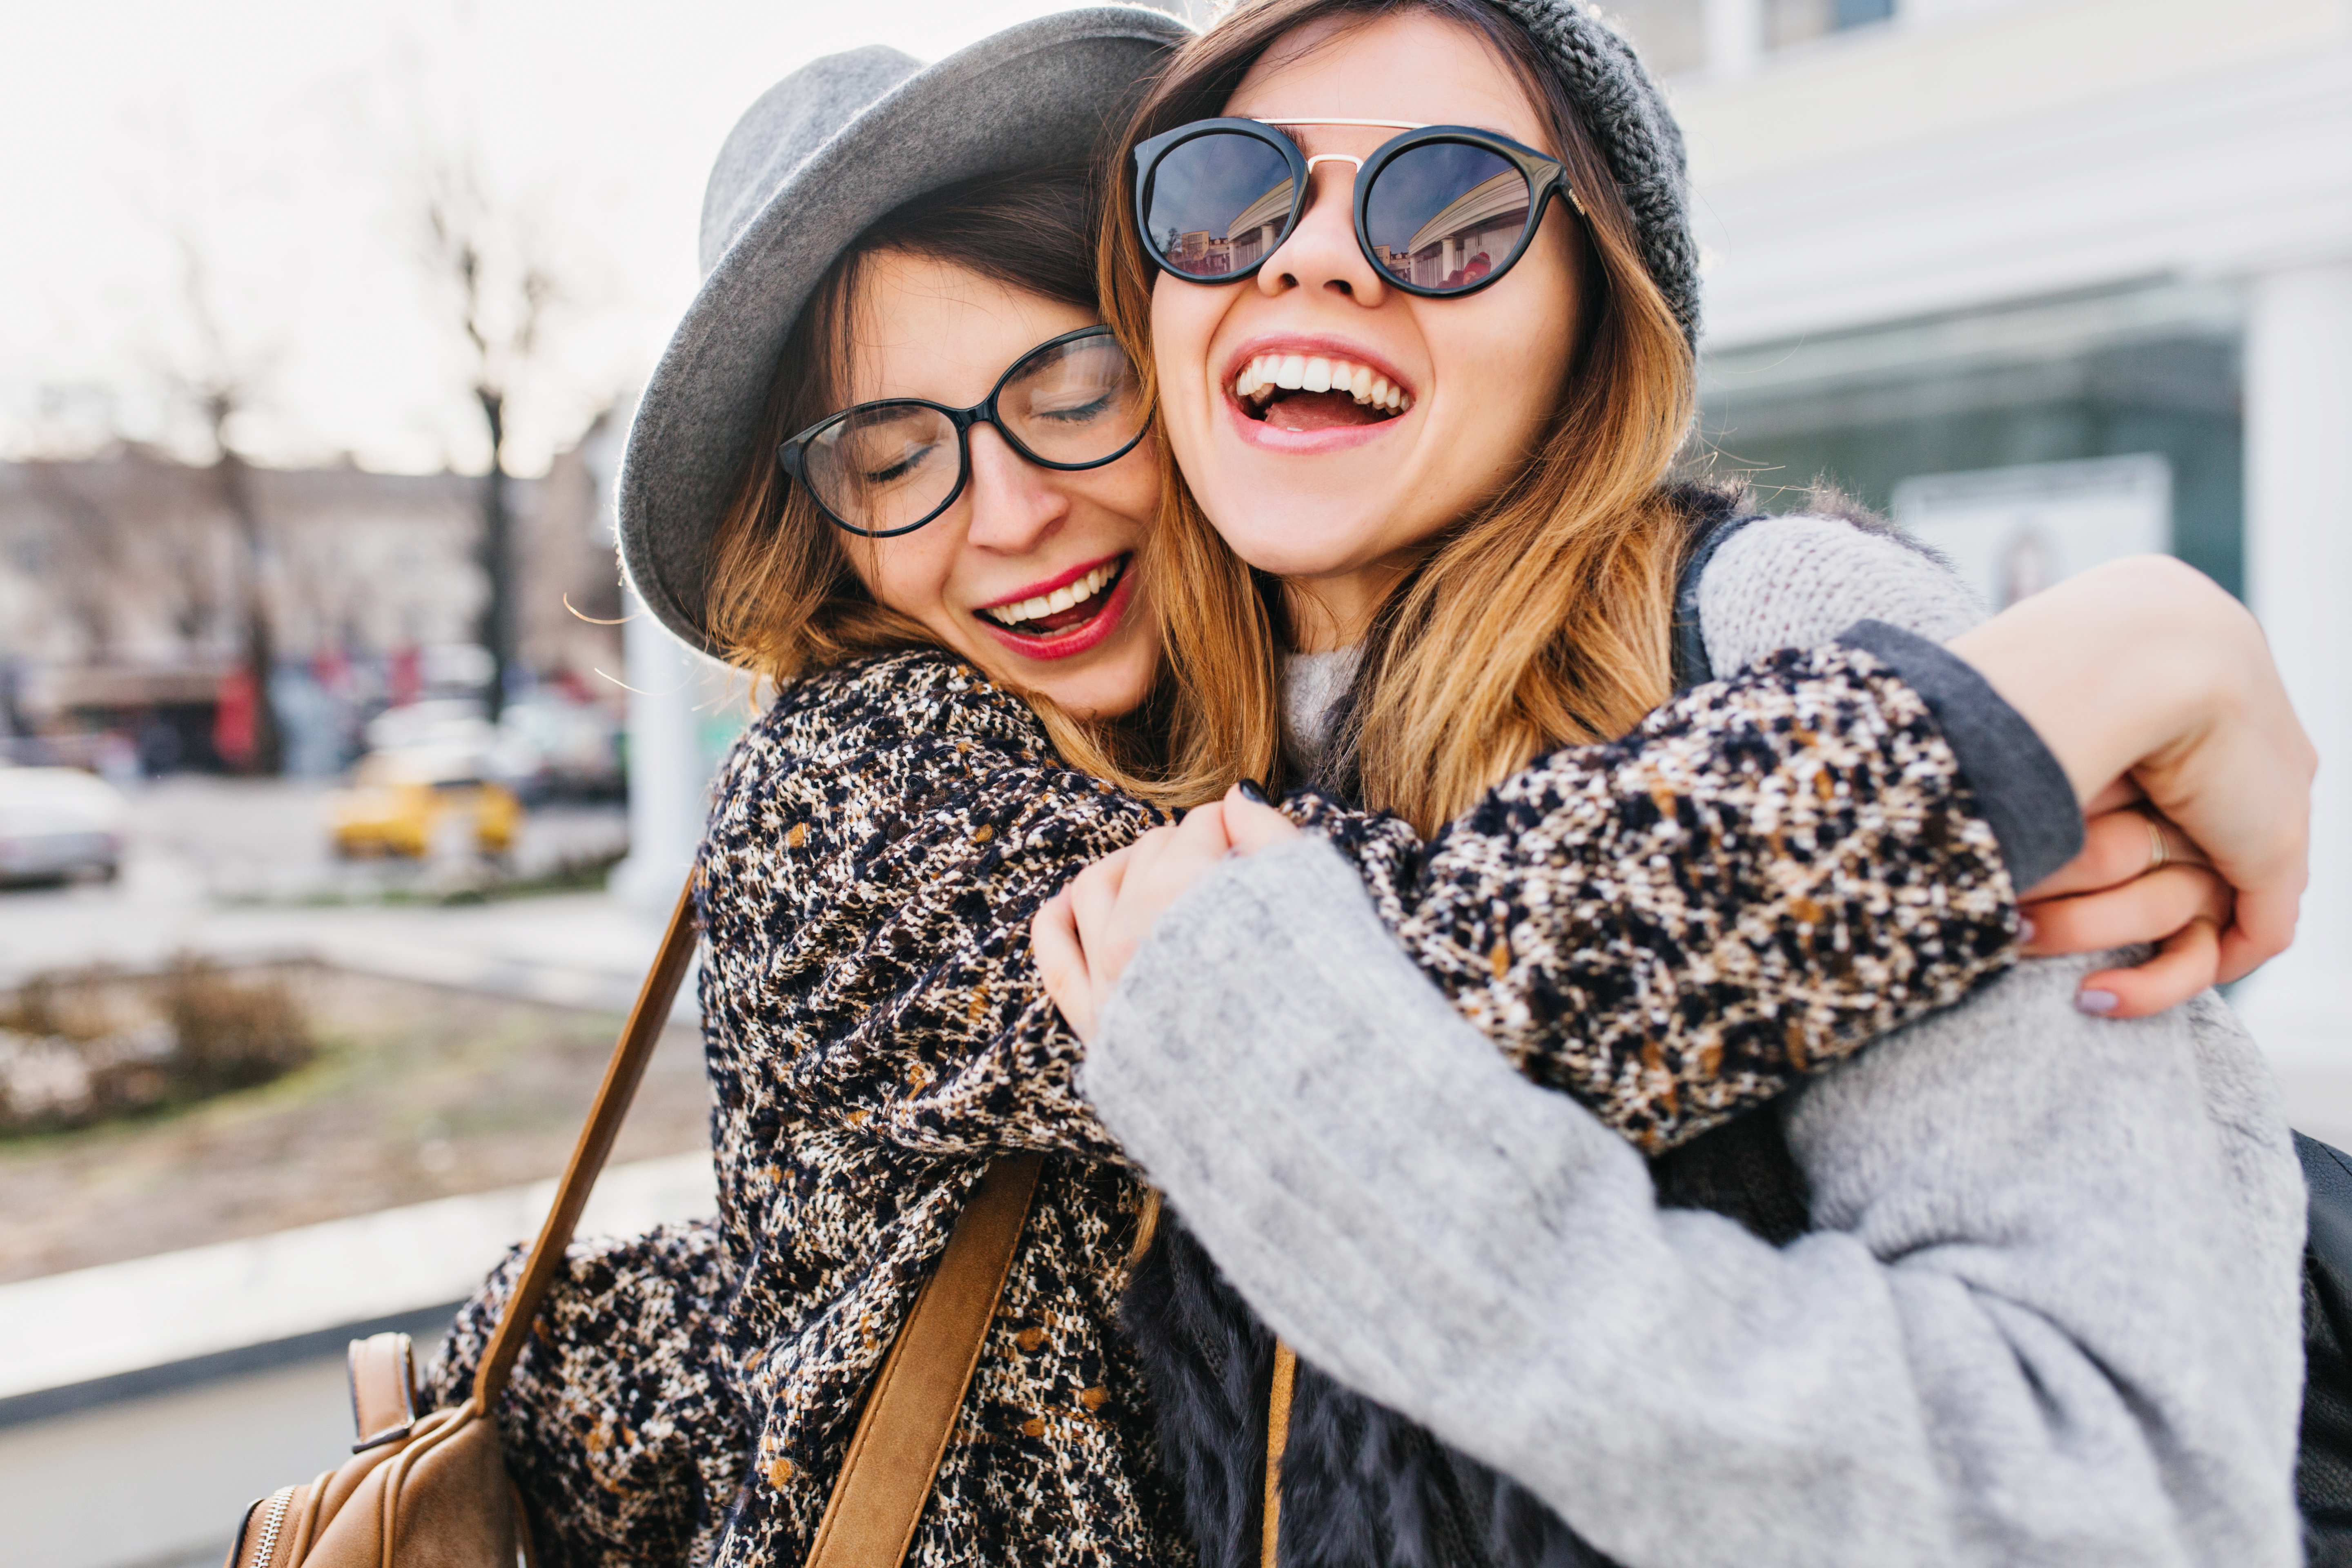 Two happy women embracing | Source: Shutterstock